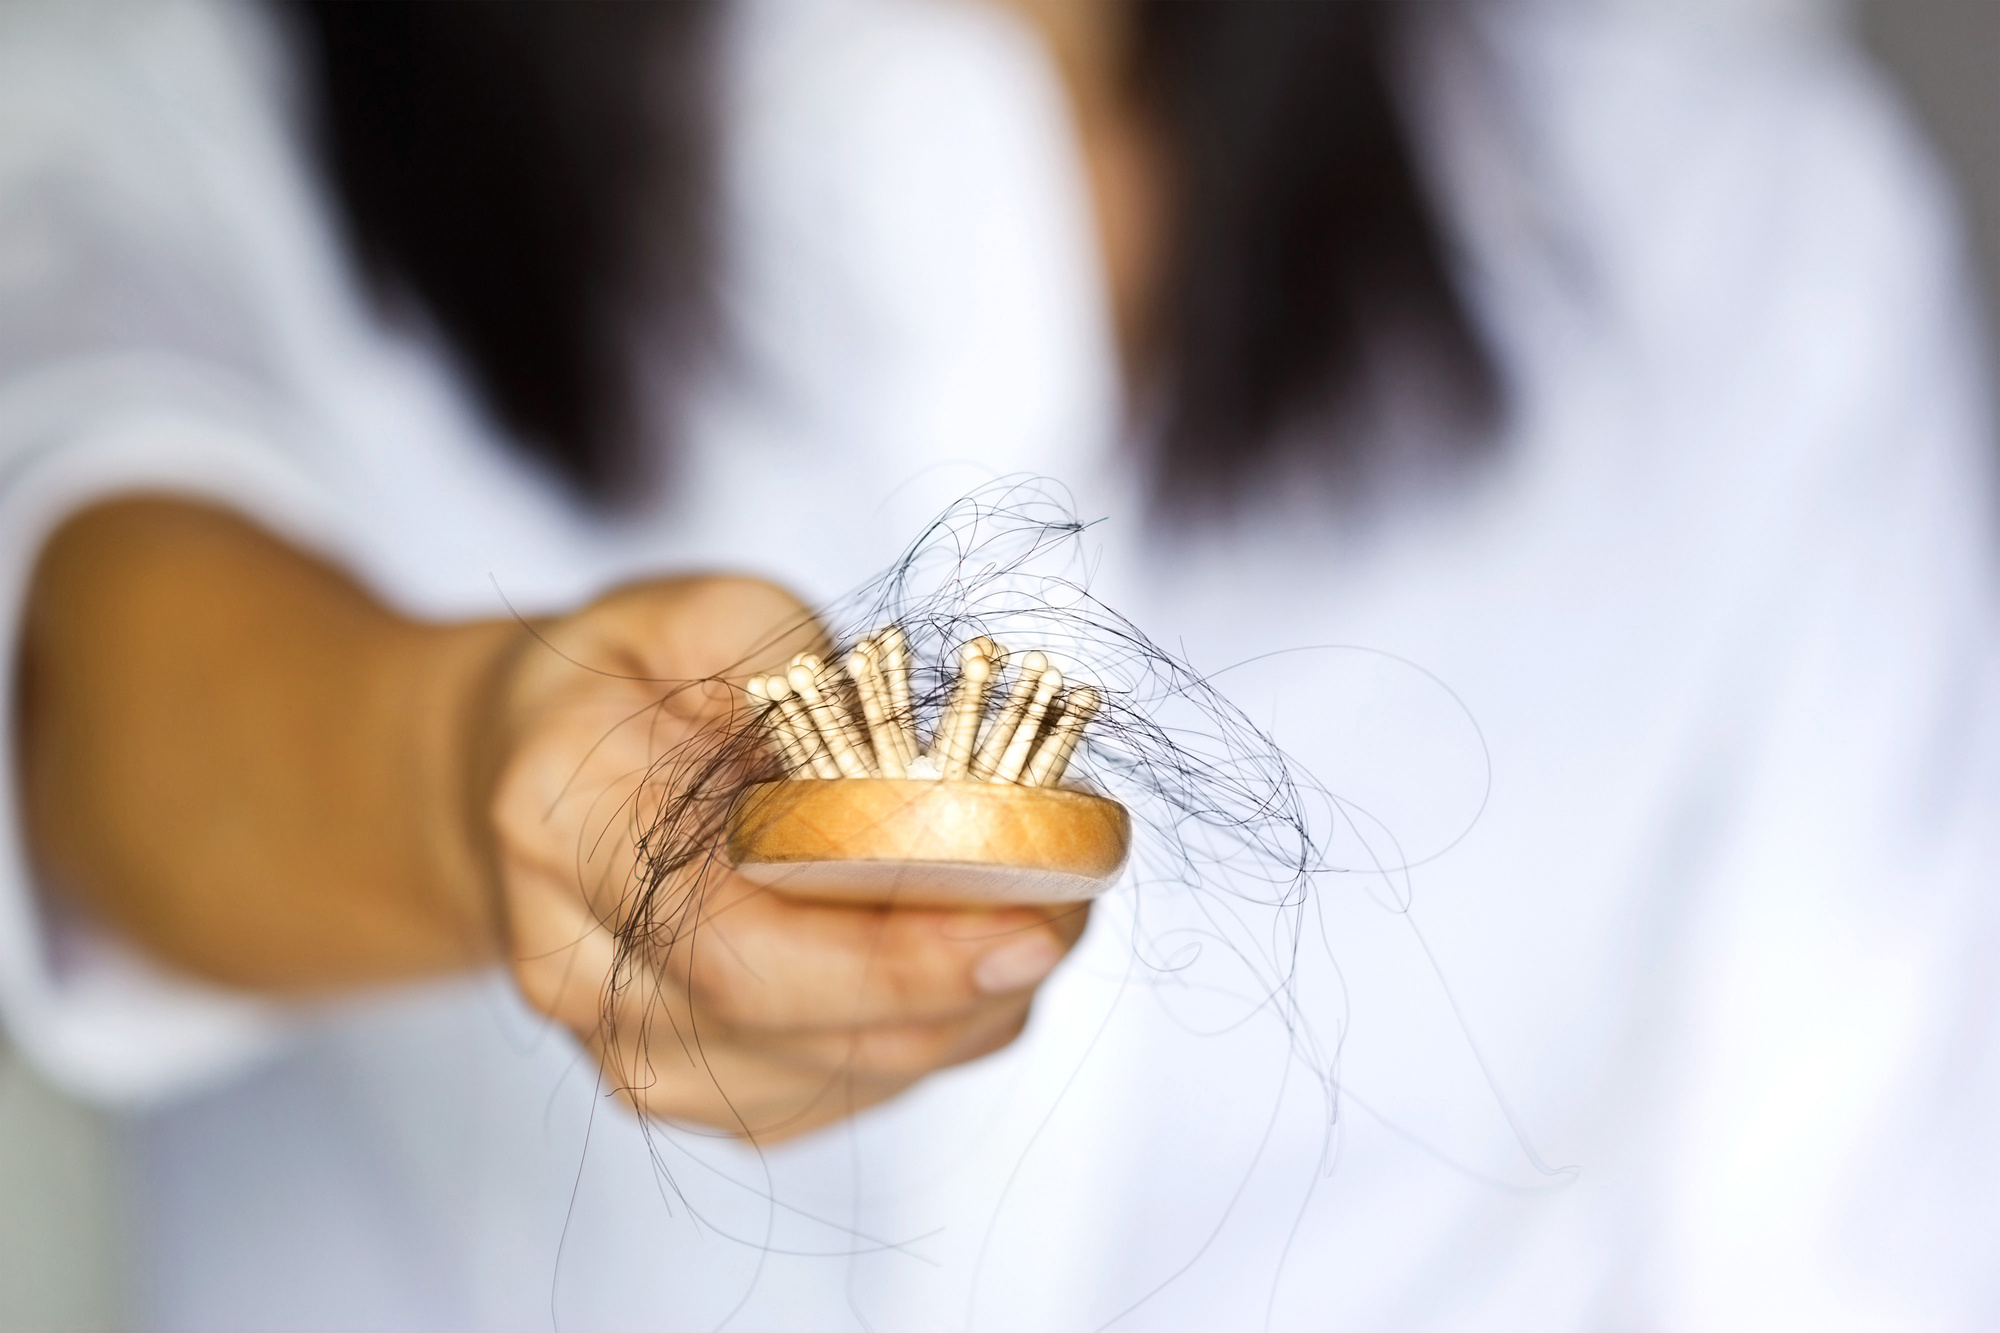 hair loss remedies